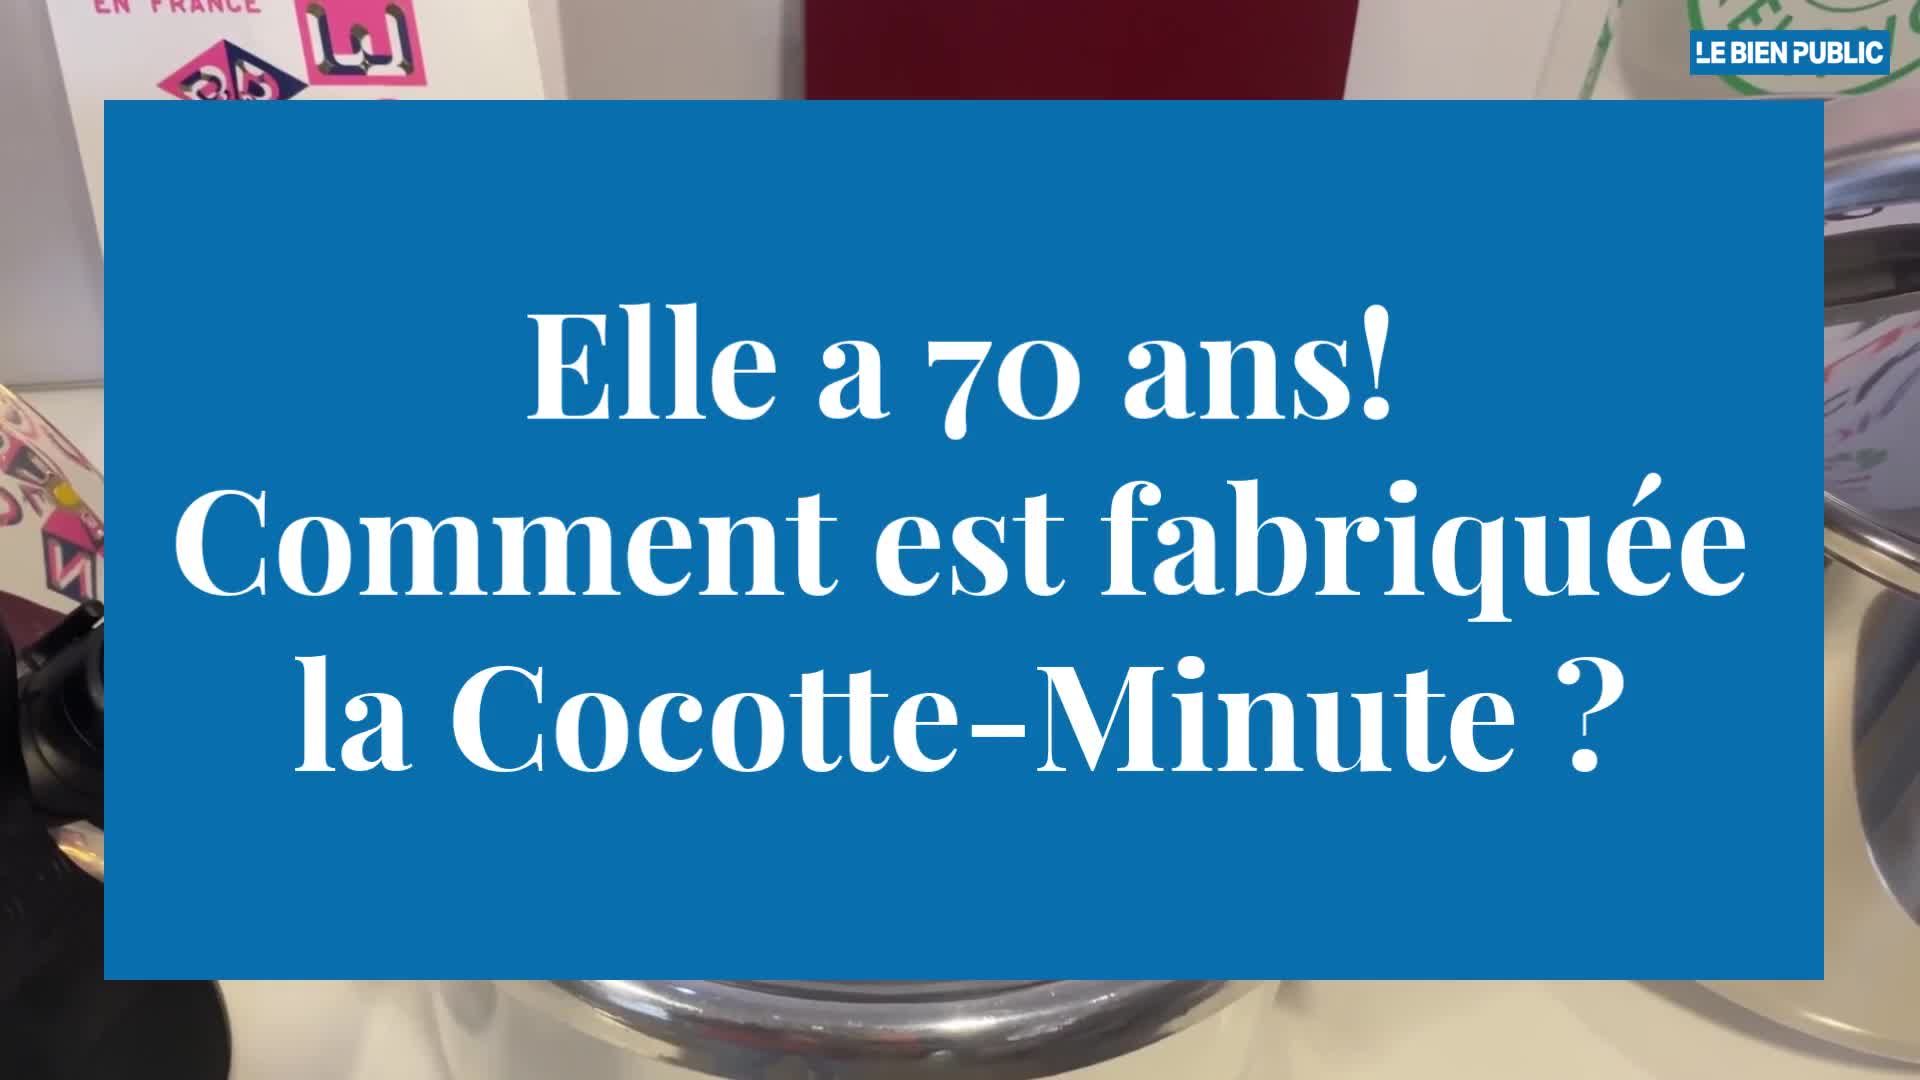 La Cocotte-minute de Seb a 70 ans - France Bleu